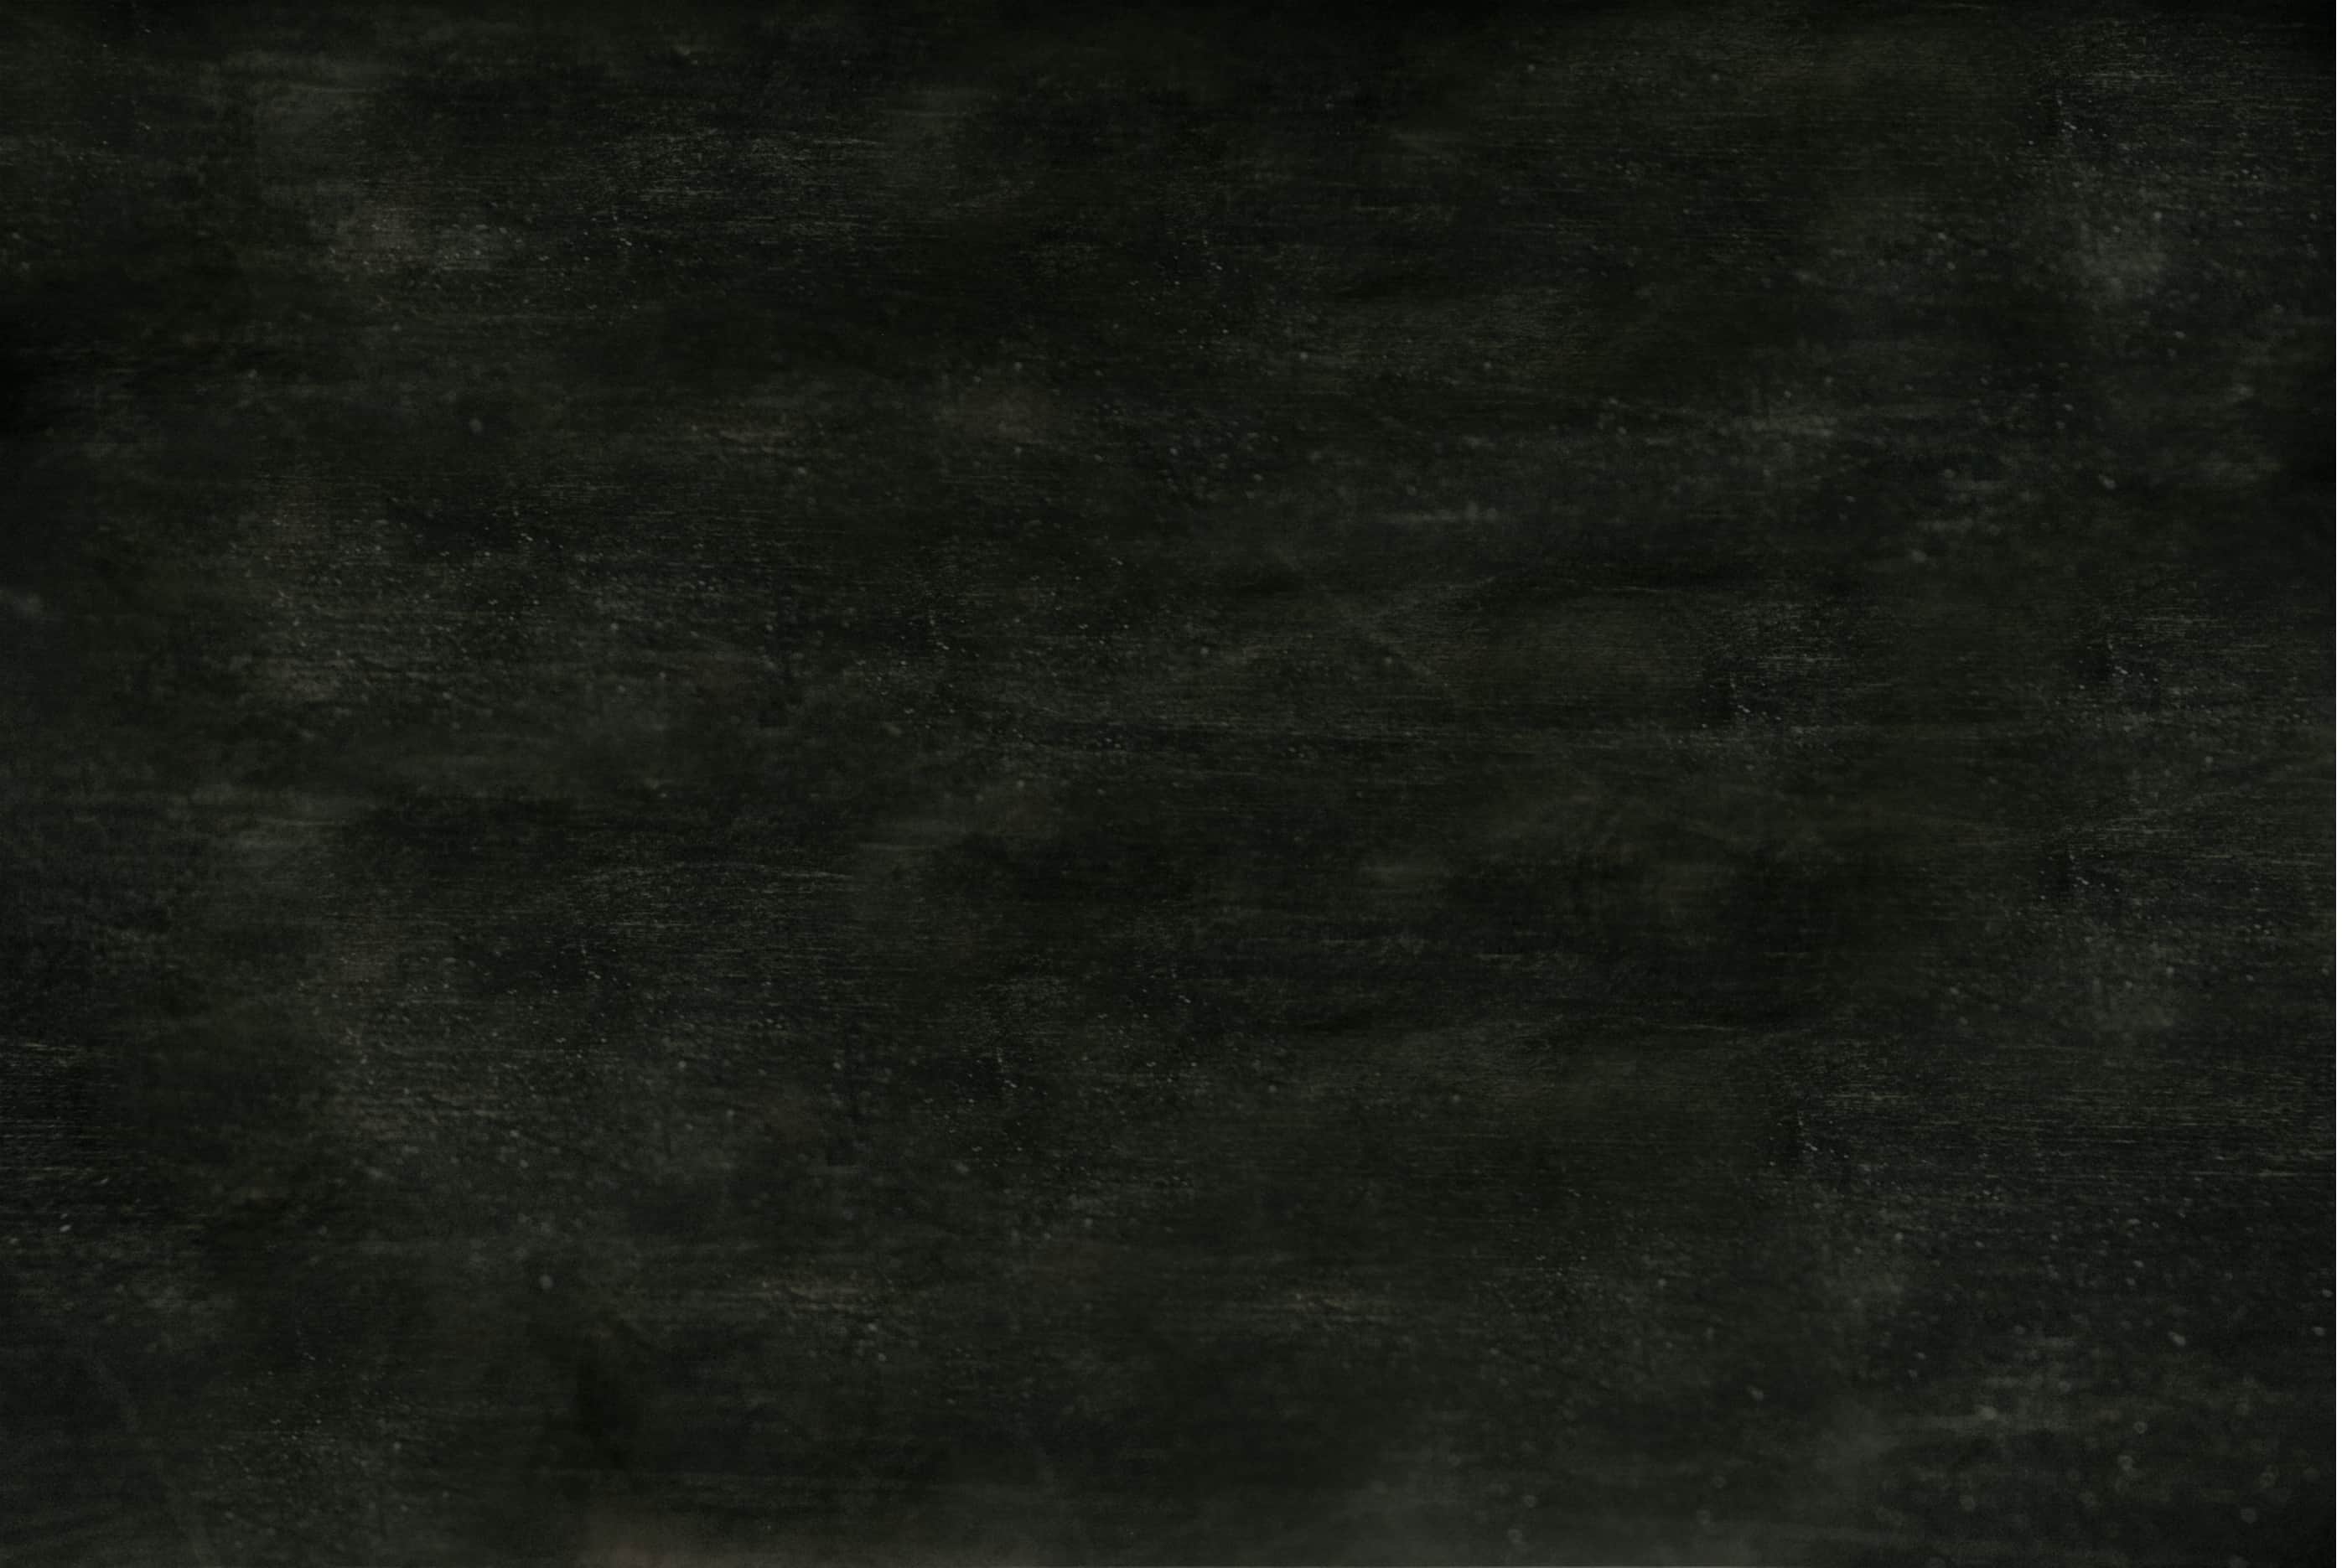 Black Chalkboard Background - The Gunny Sack
